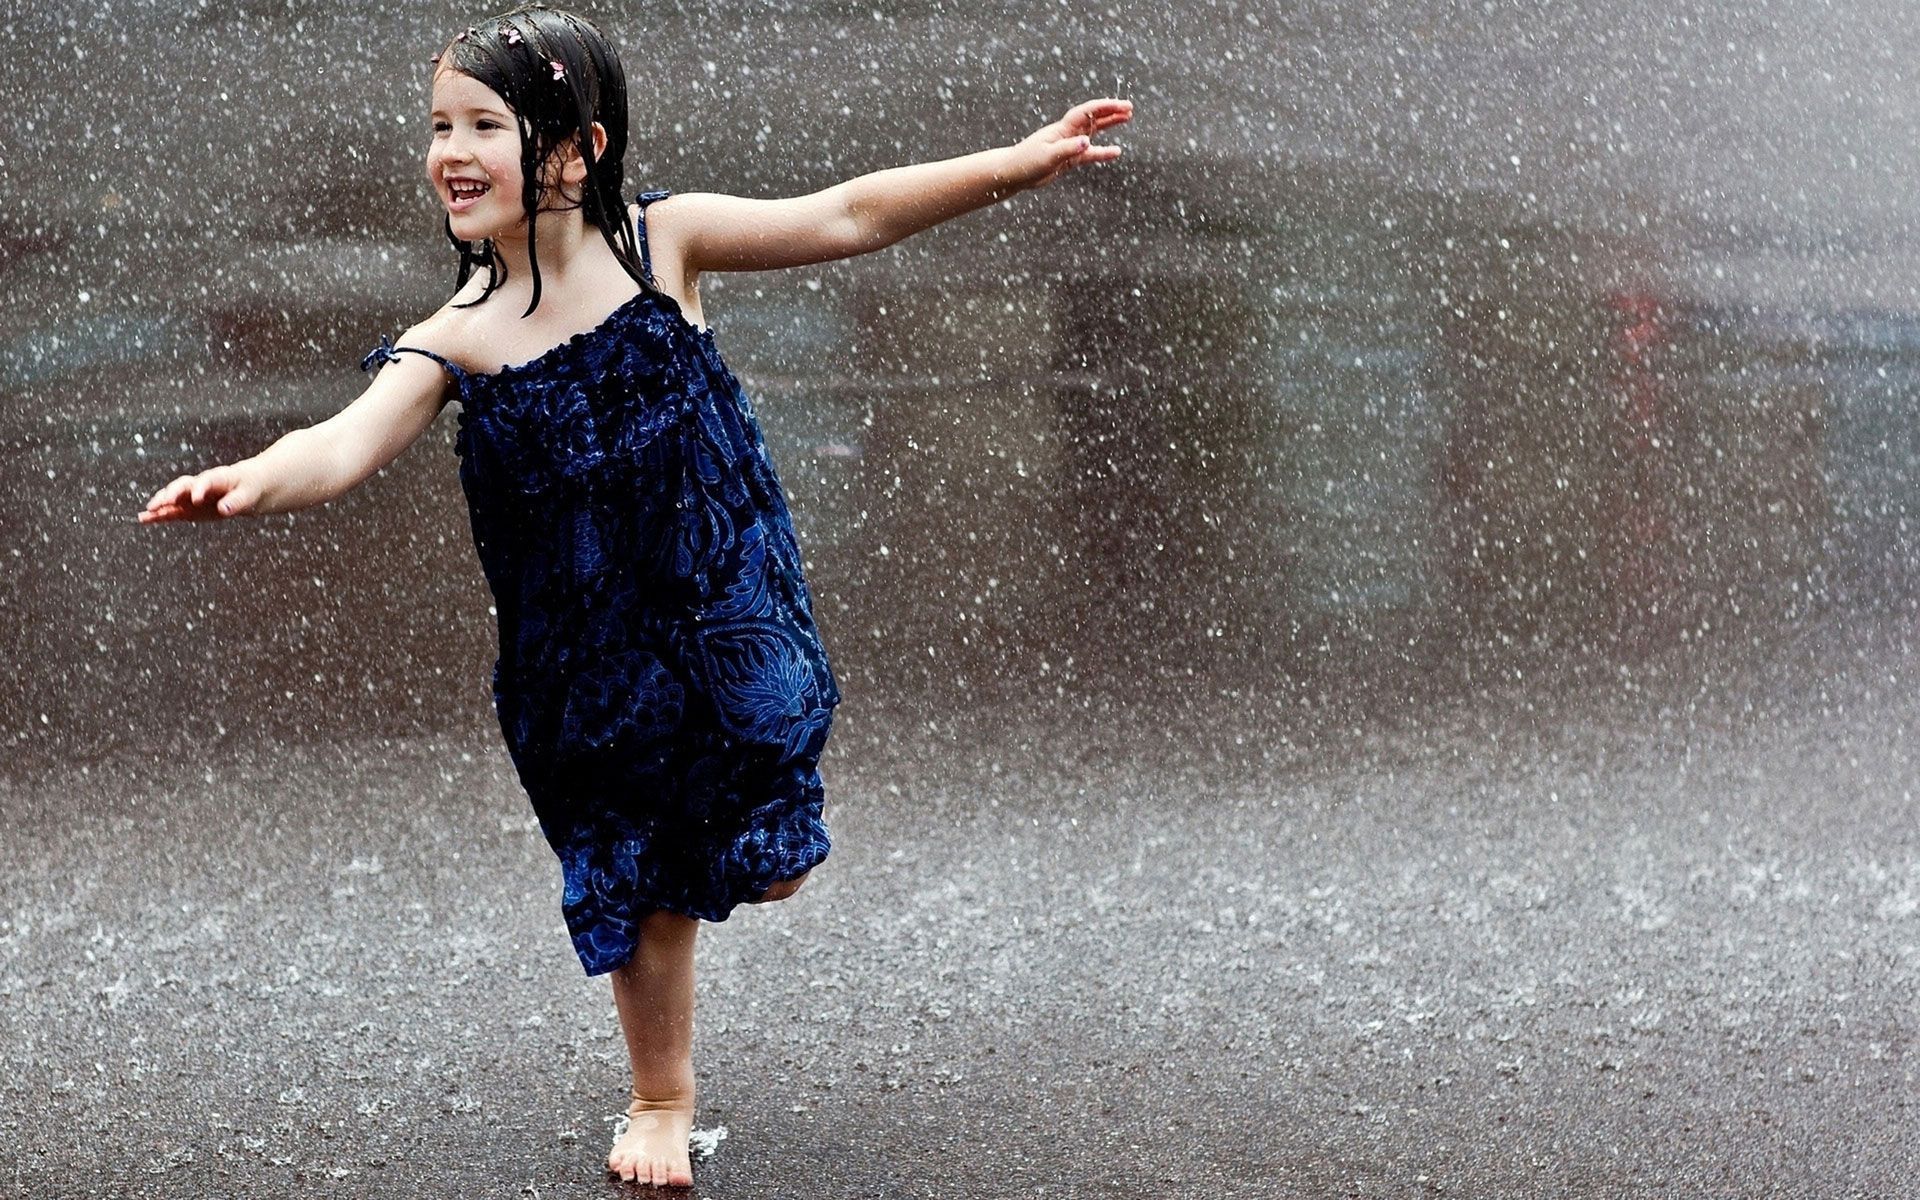 Dancing In The Rain Images Wallpapers